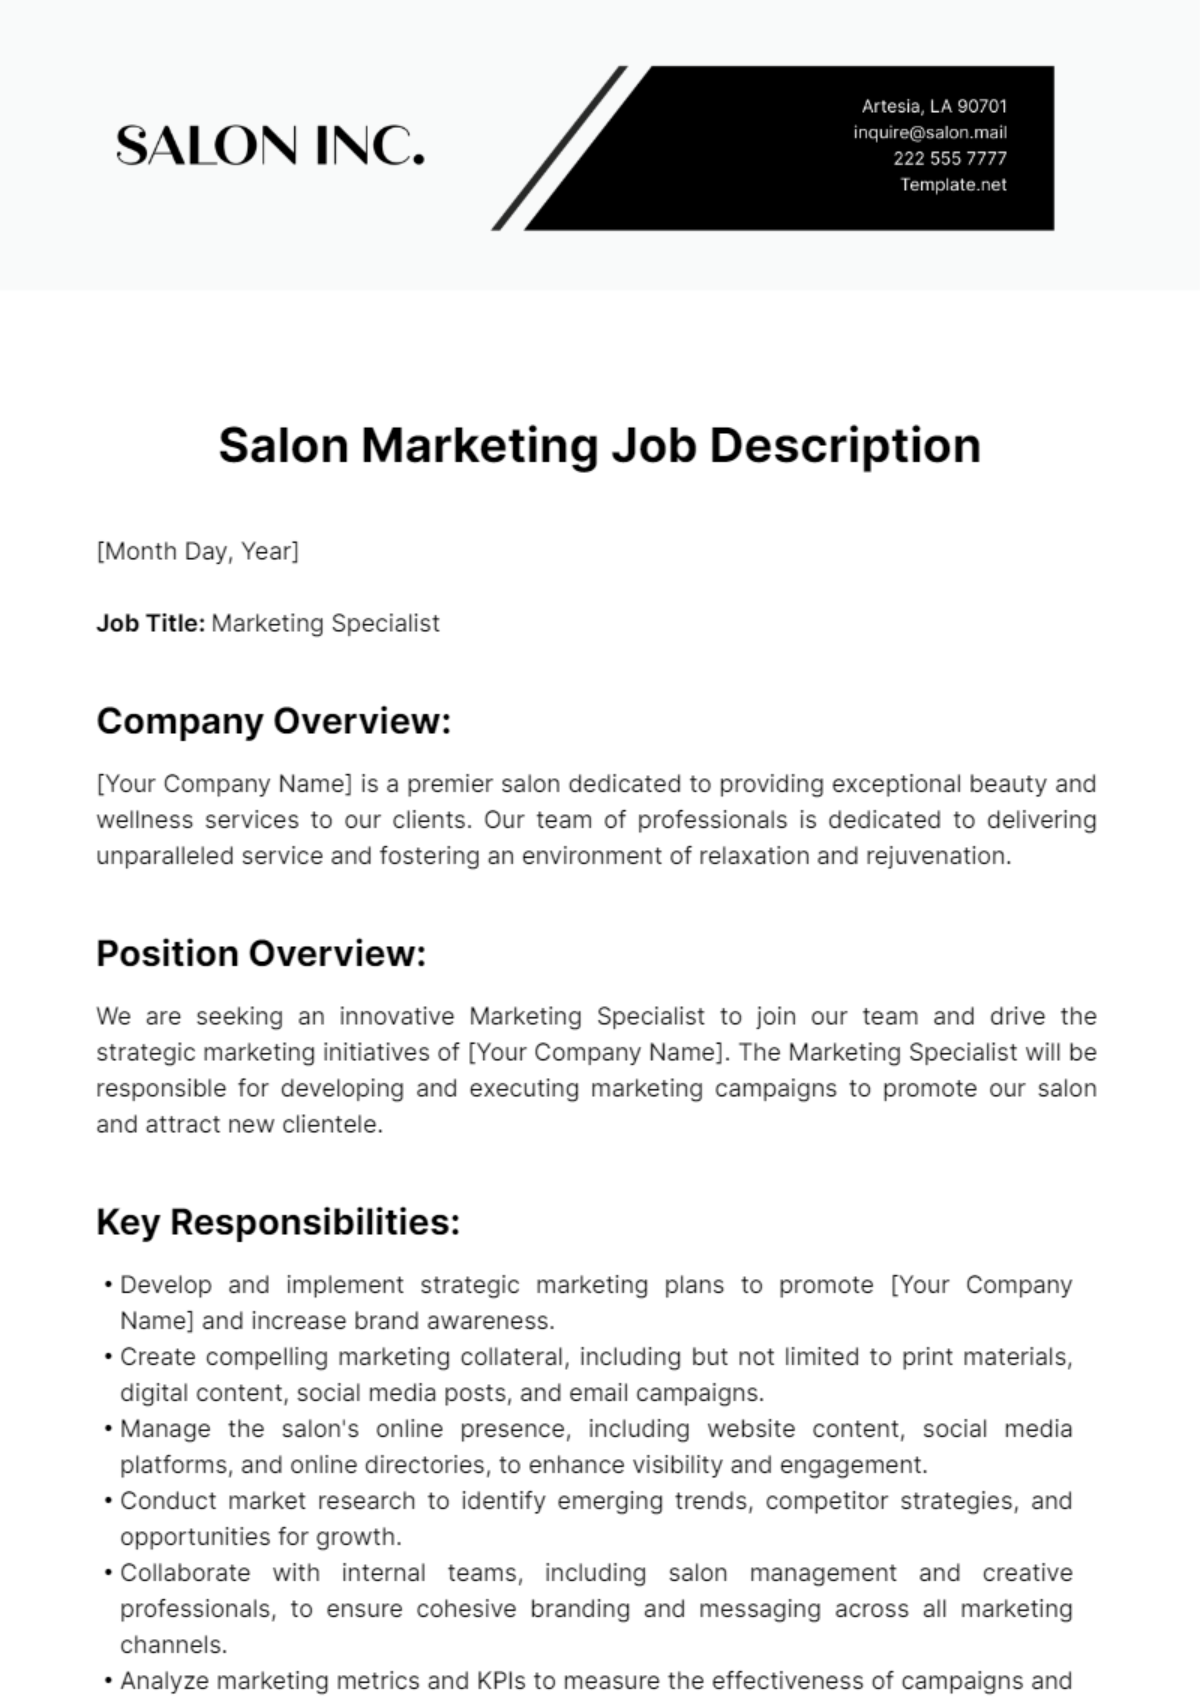 Salon Marketing Job Description Template